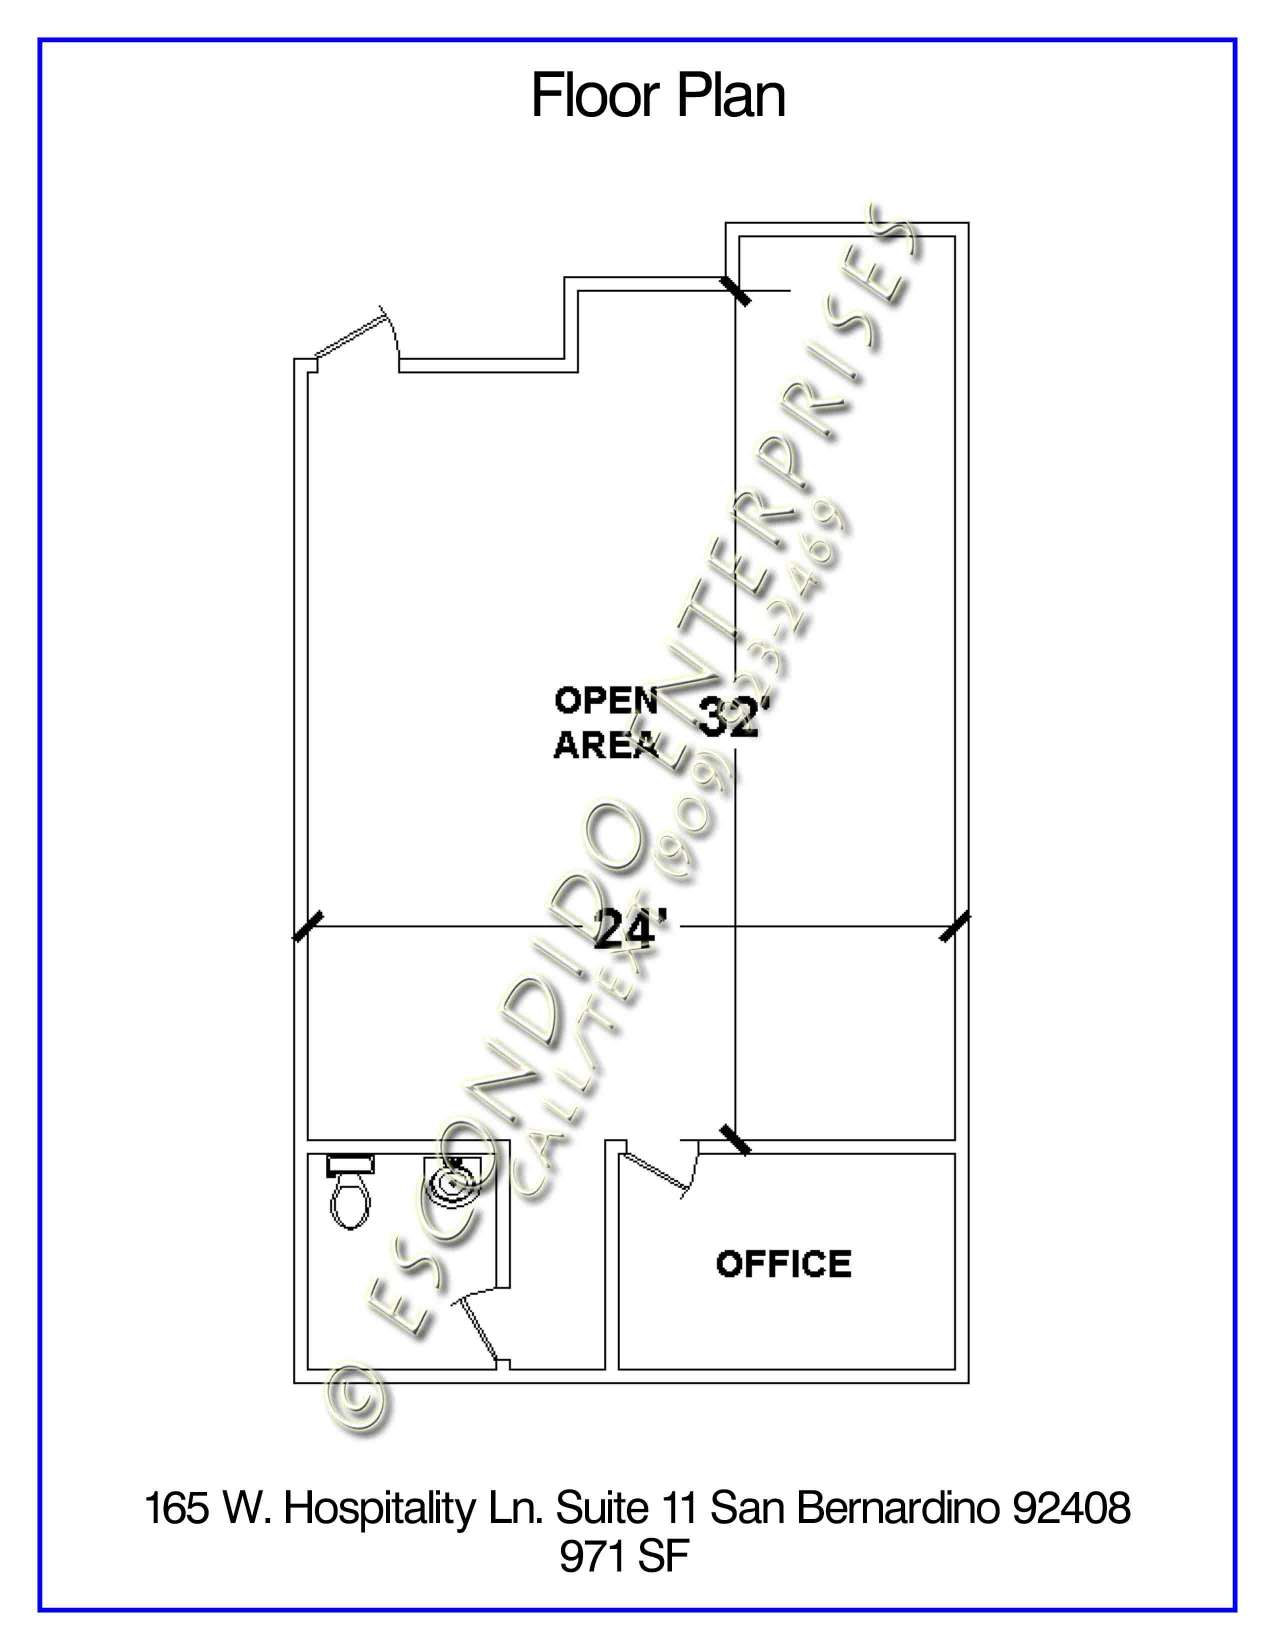 Floor plan of office space located at 165 W. Hospitality Lane, Suite 11, San Bernardino, CA 92408